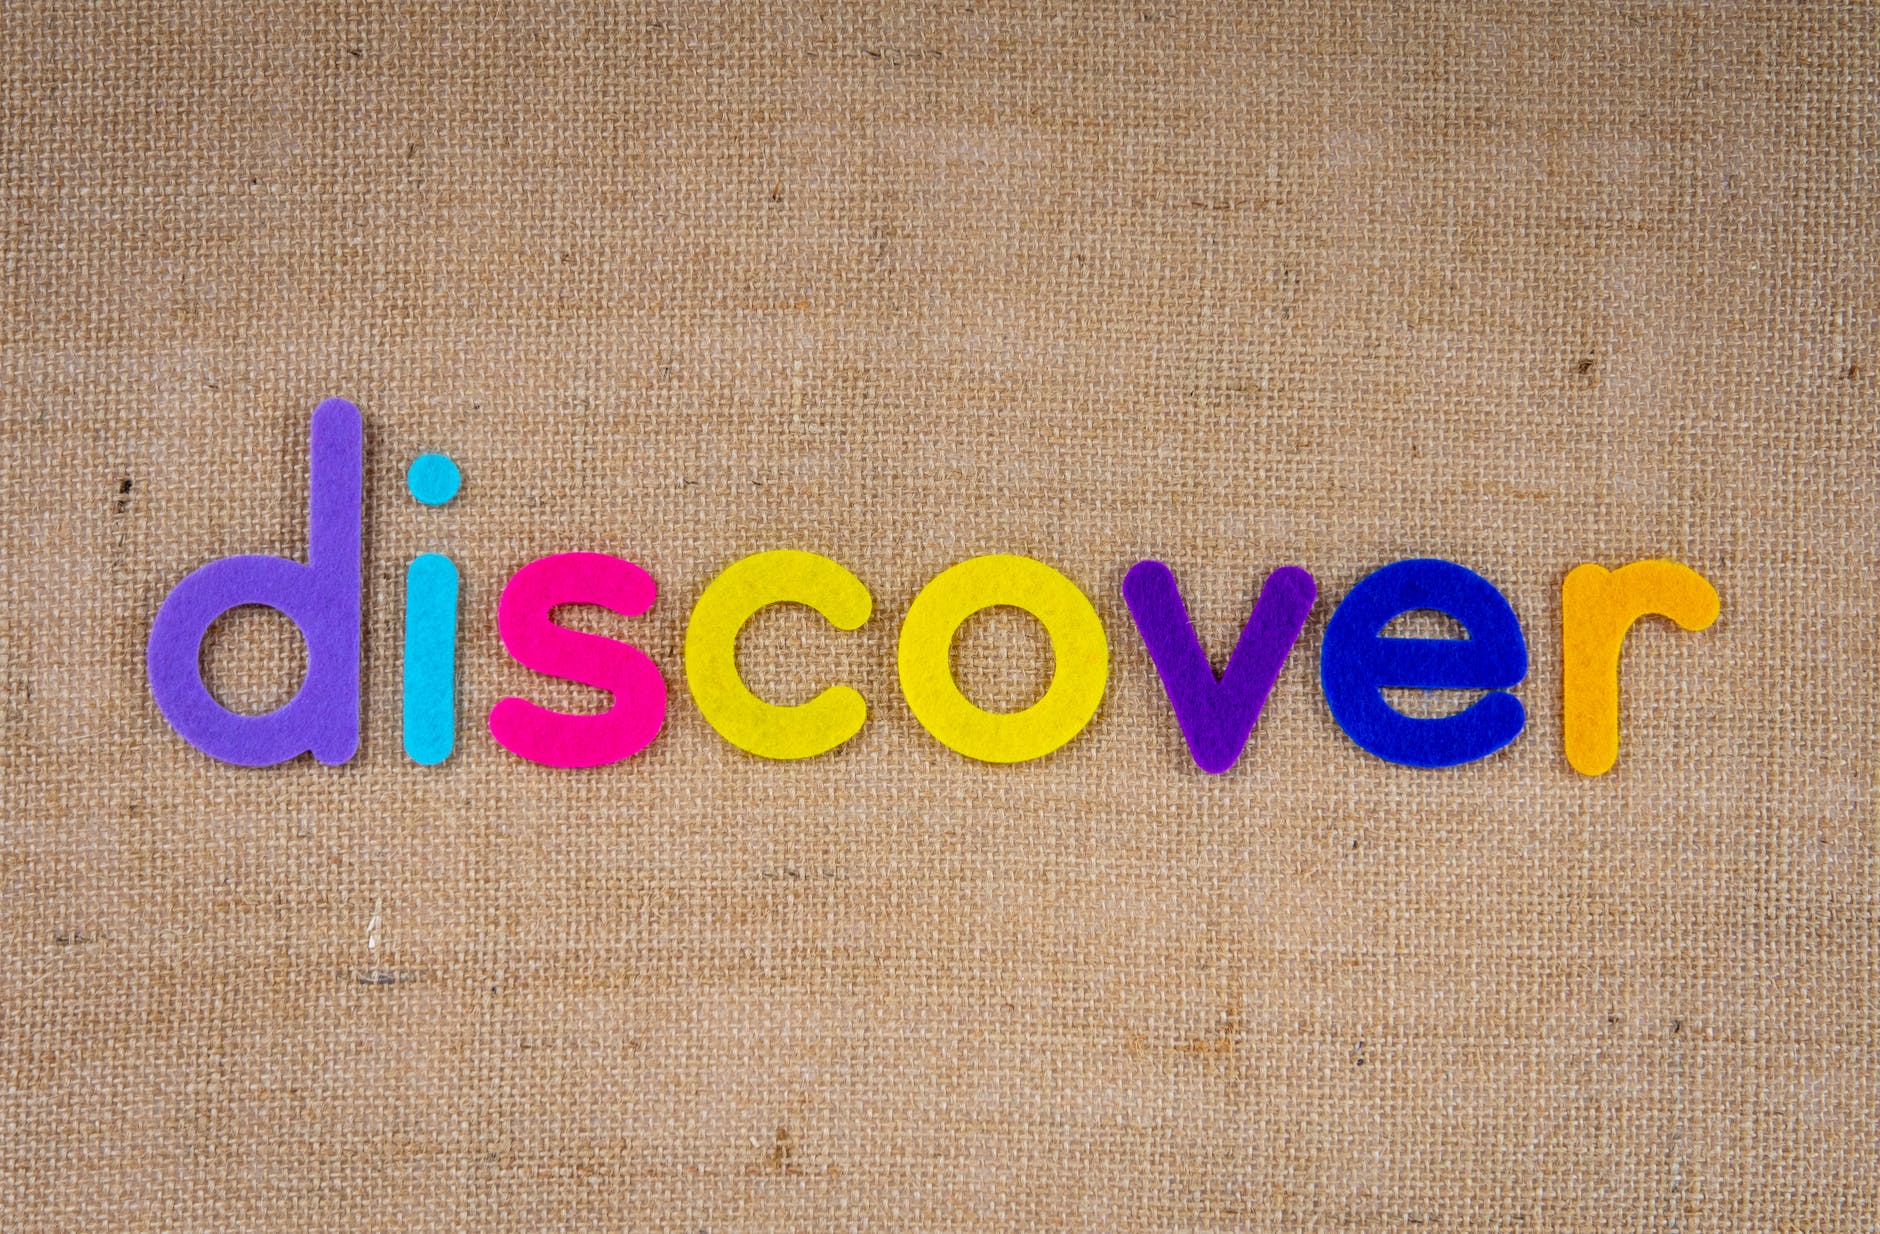 felt letters spelling 'discover'